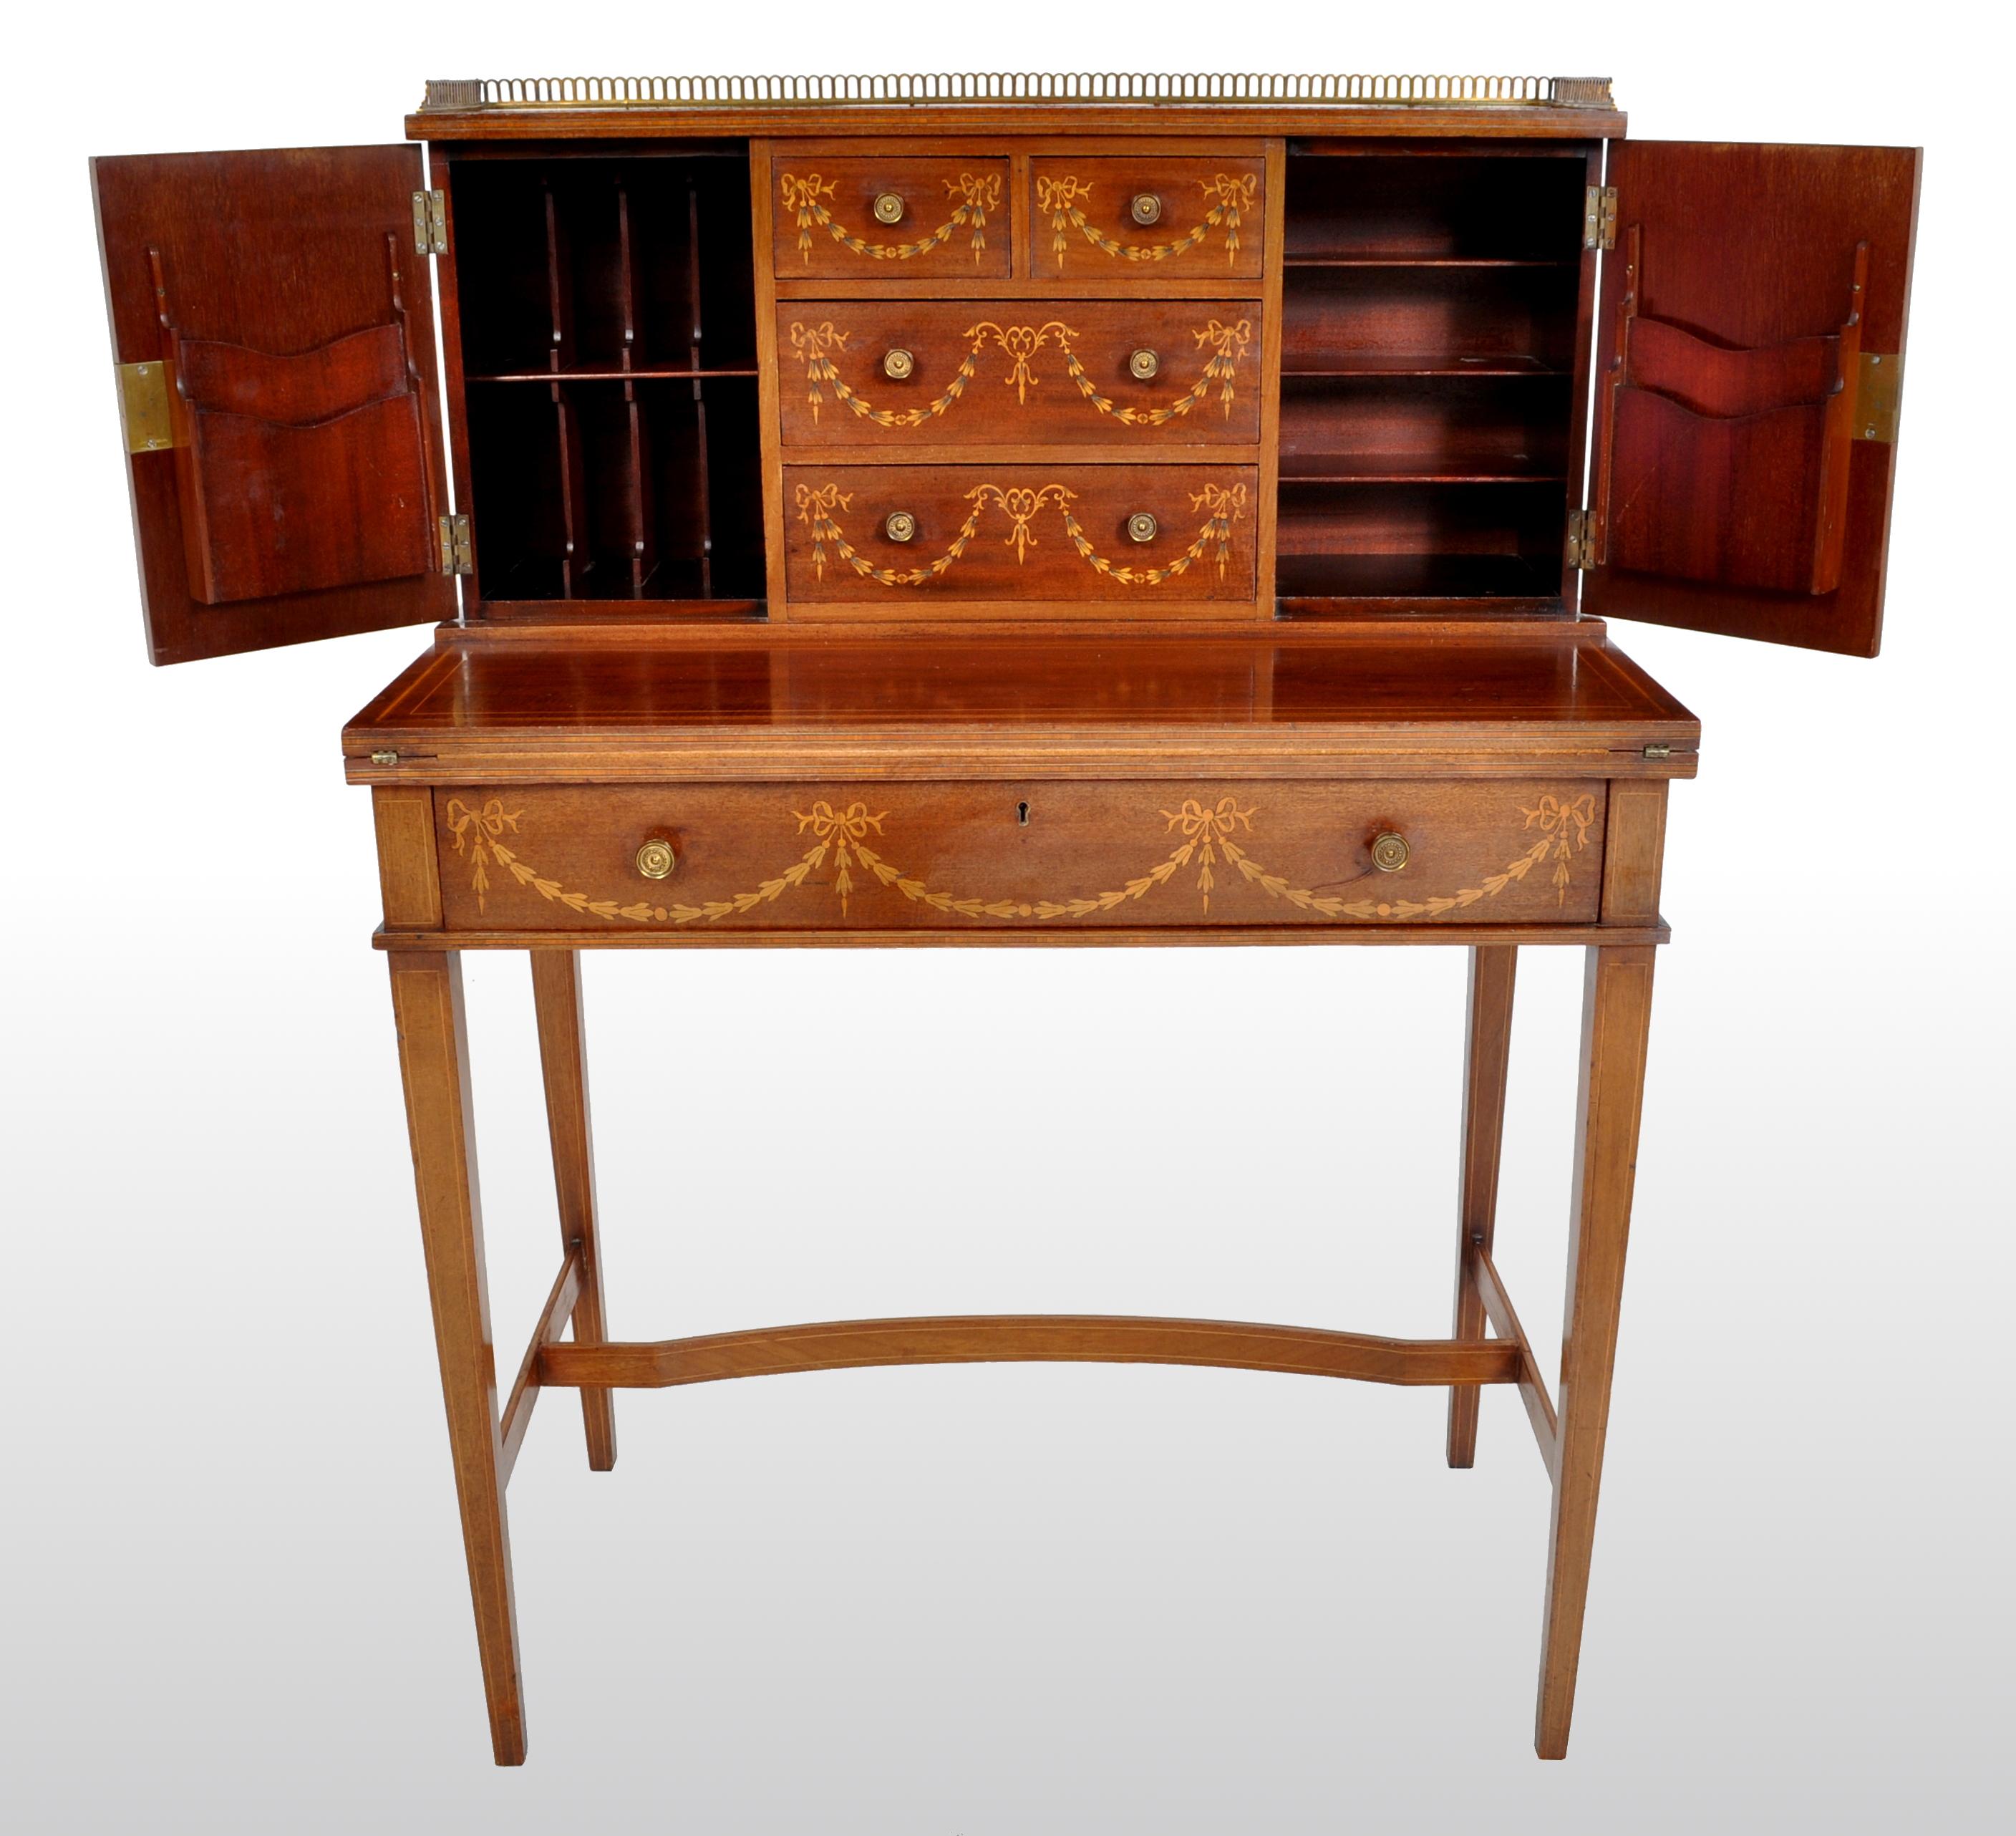 19th Century Antique Sheraton Revival Inlaid Mahogany Desk / Writing Table, circa 1895